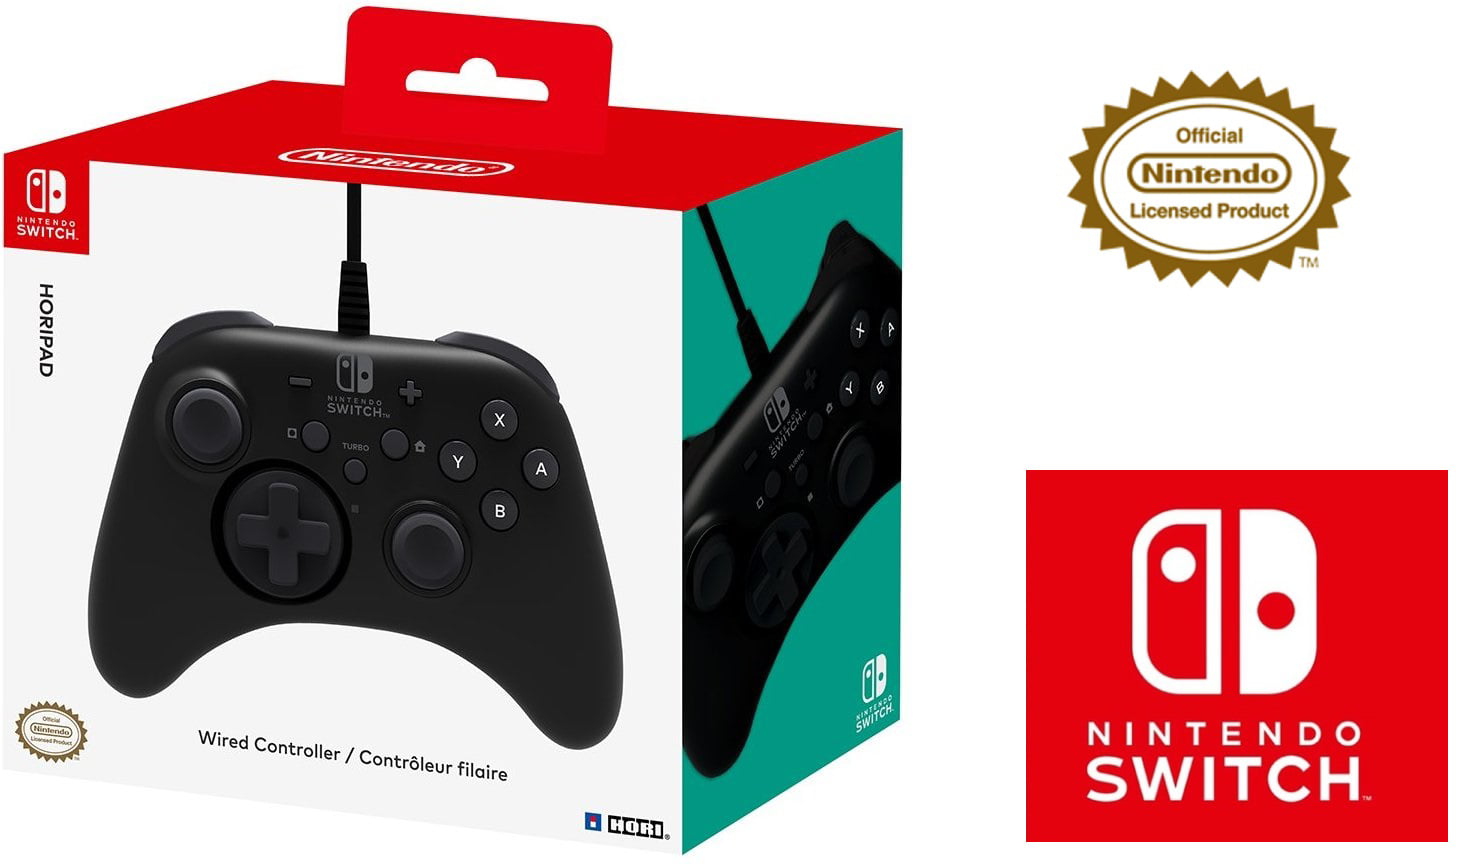 HORI Nintendo Switch HORIPAD Wired Controller Officially Licensed by Nintendo - Nintendo Switch